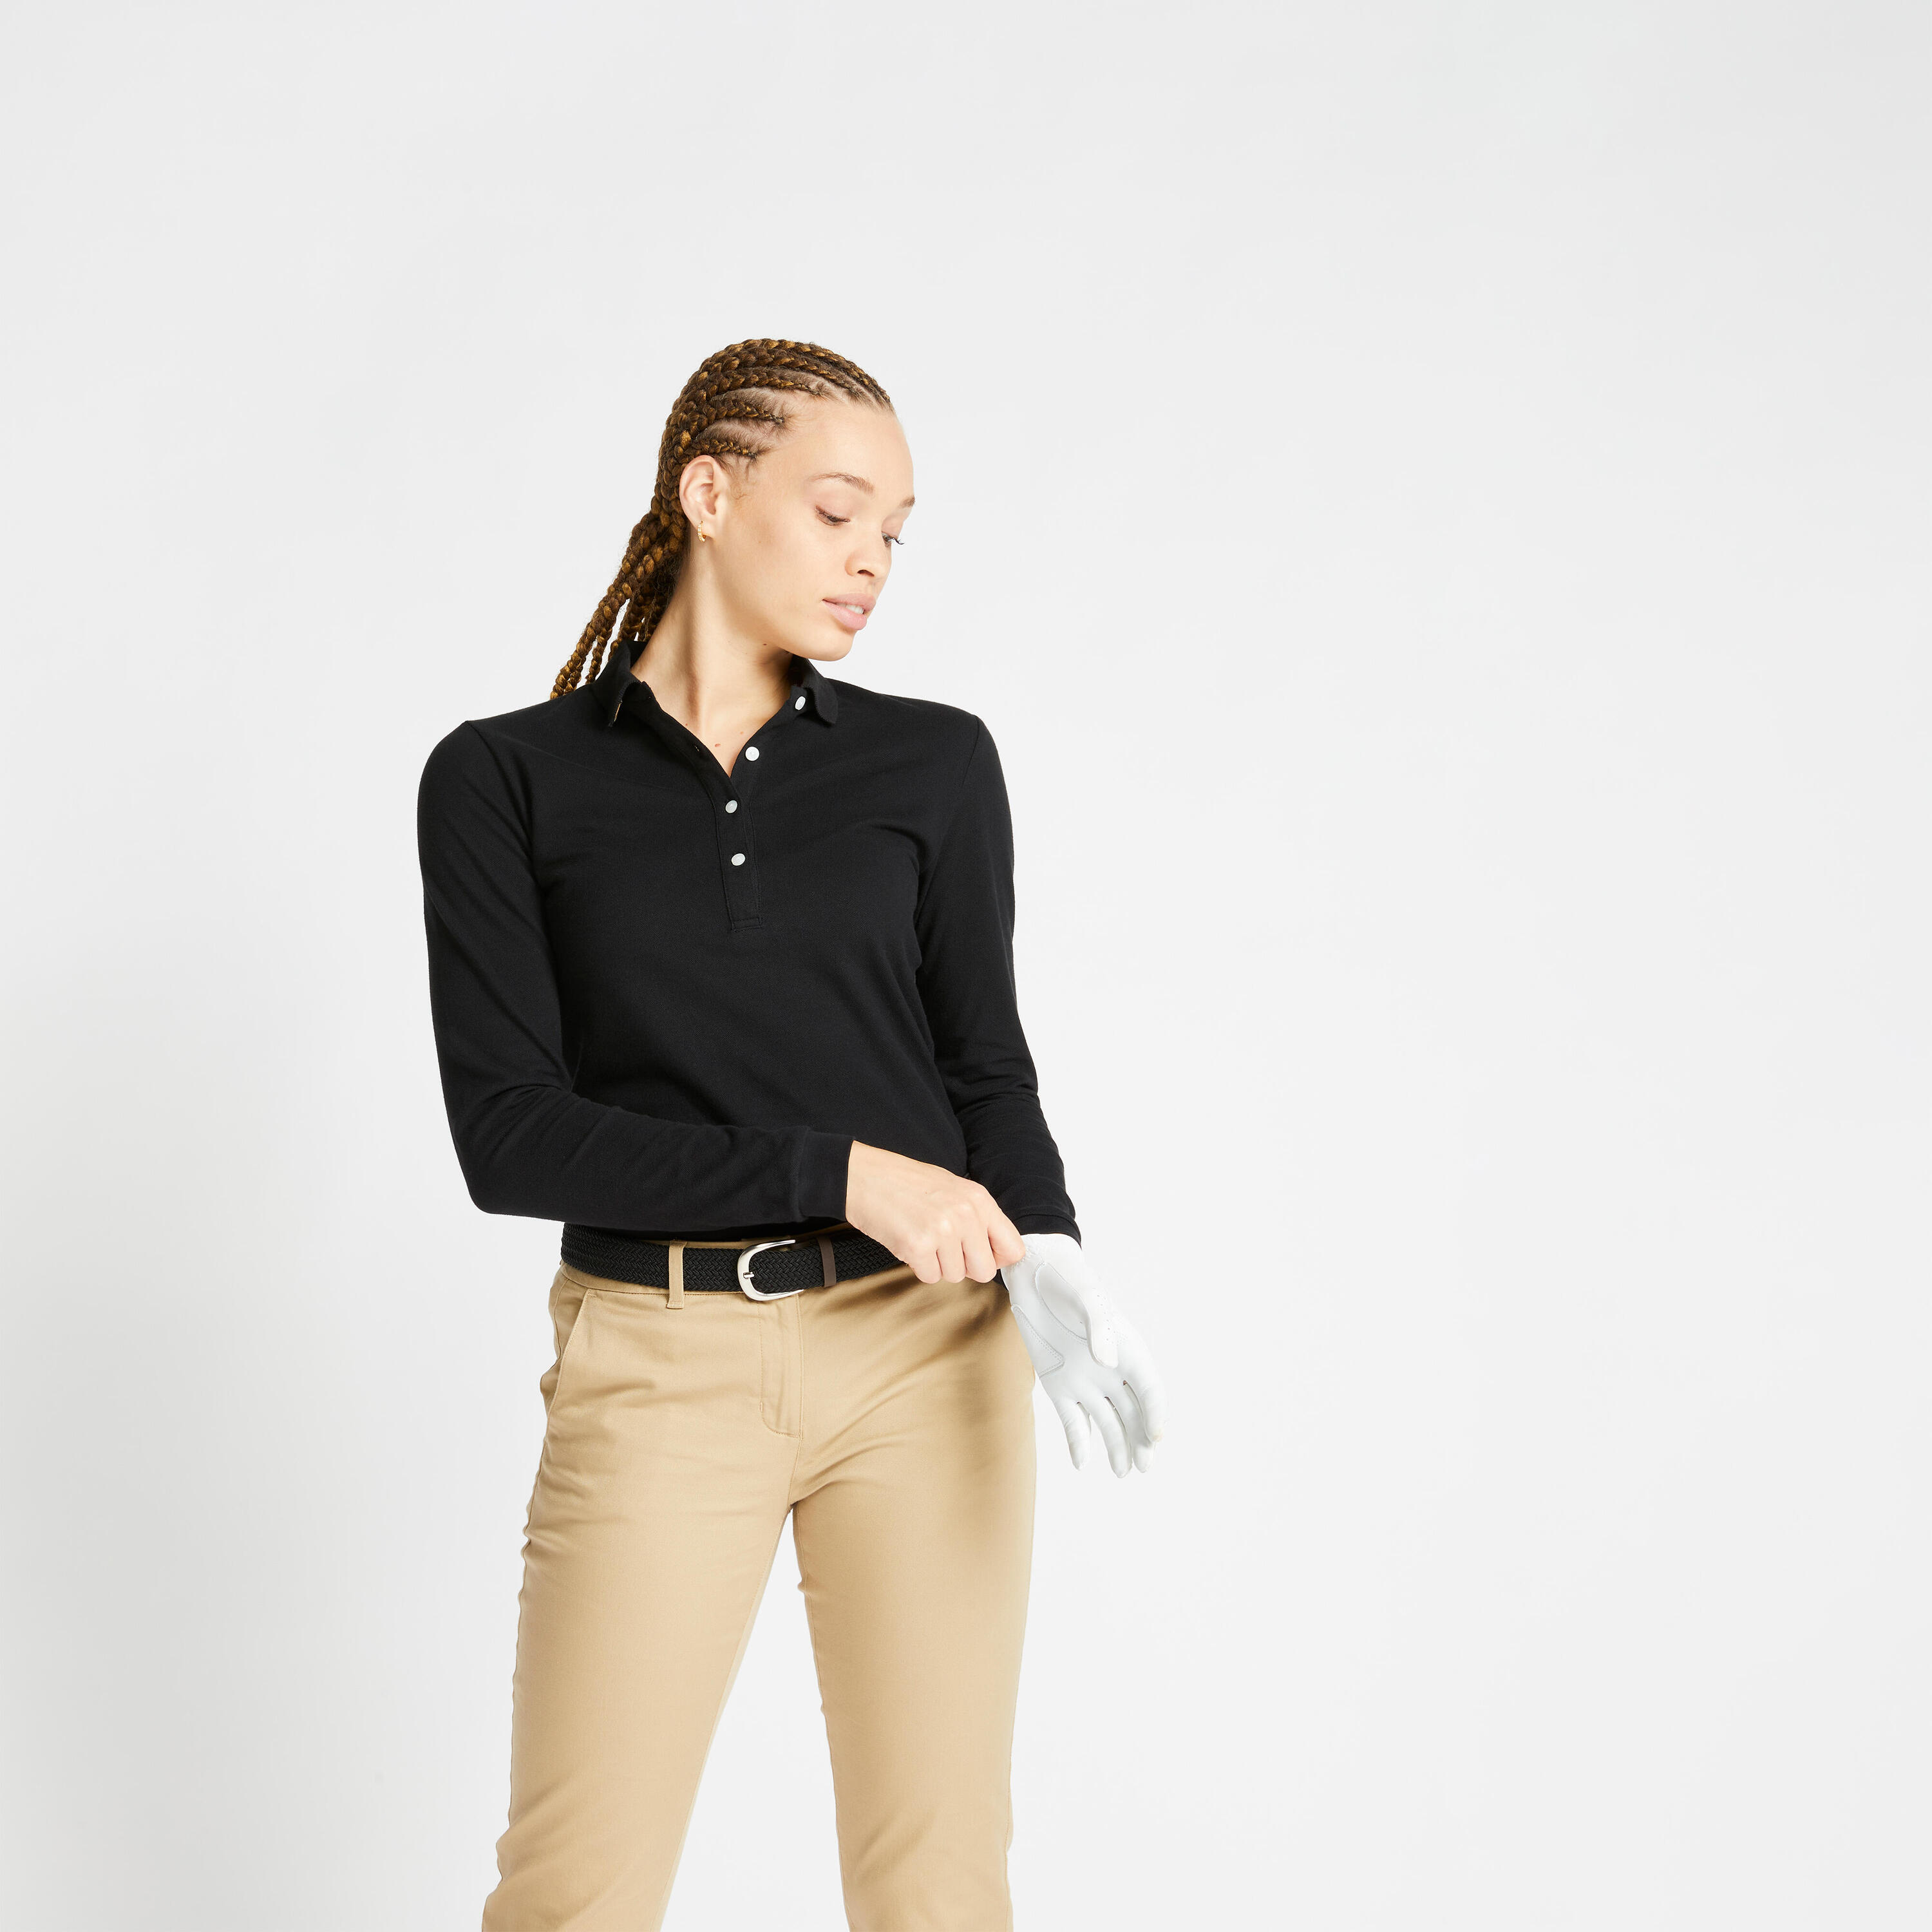 INESIS Women's golf long-sleeved polo shirt - MW500 black